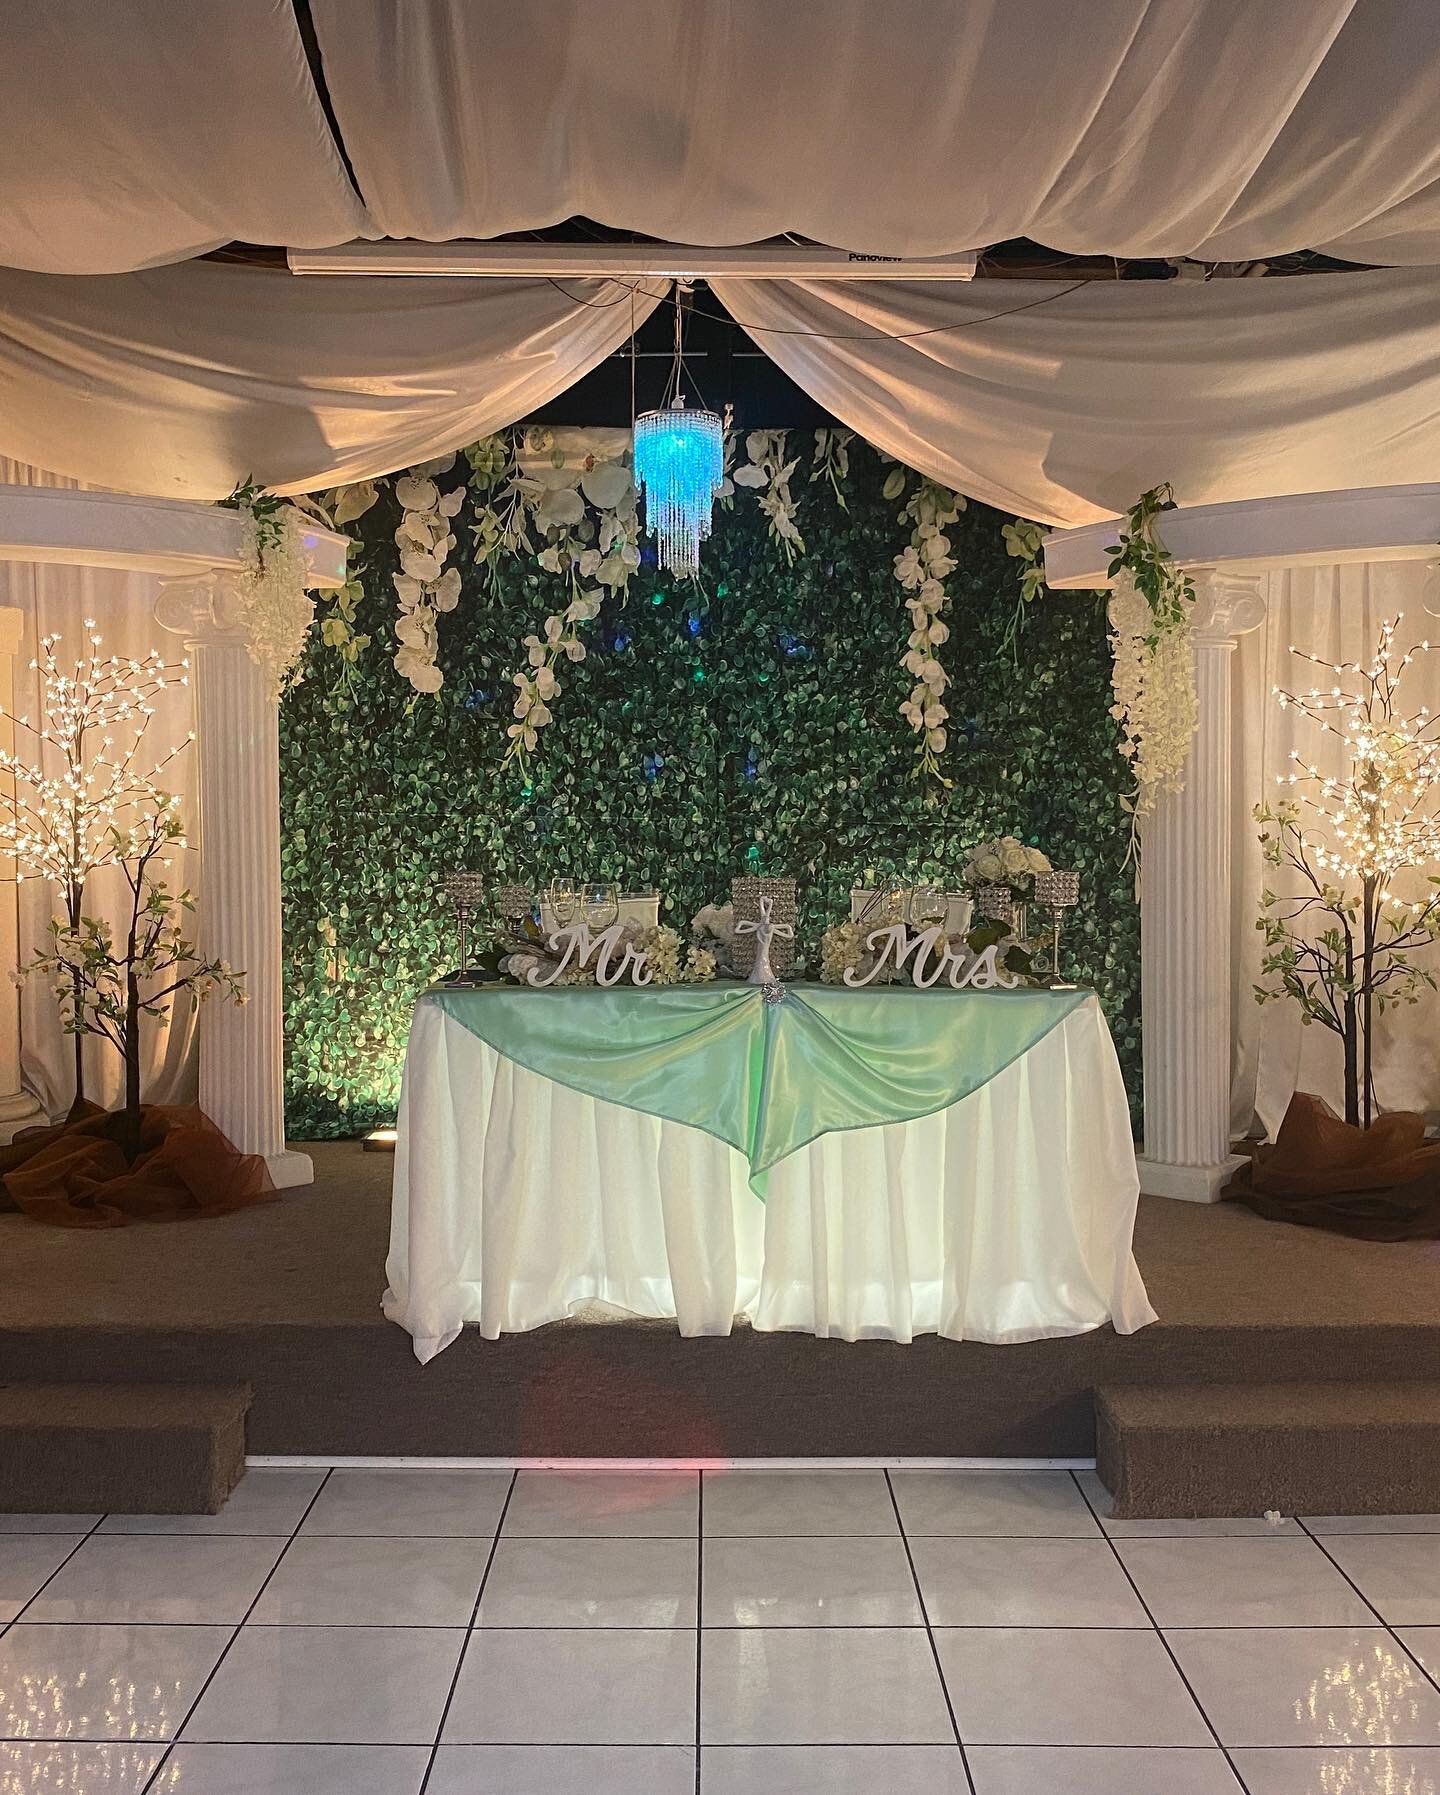 Beautifully wedding decor at our Illusions #1 #weddings #kissimmeeflorida